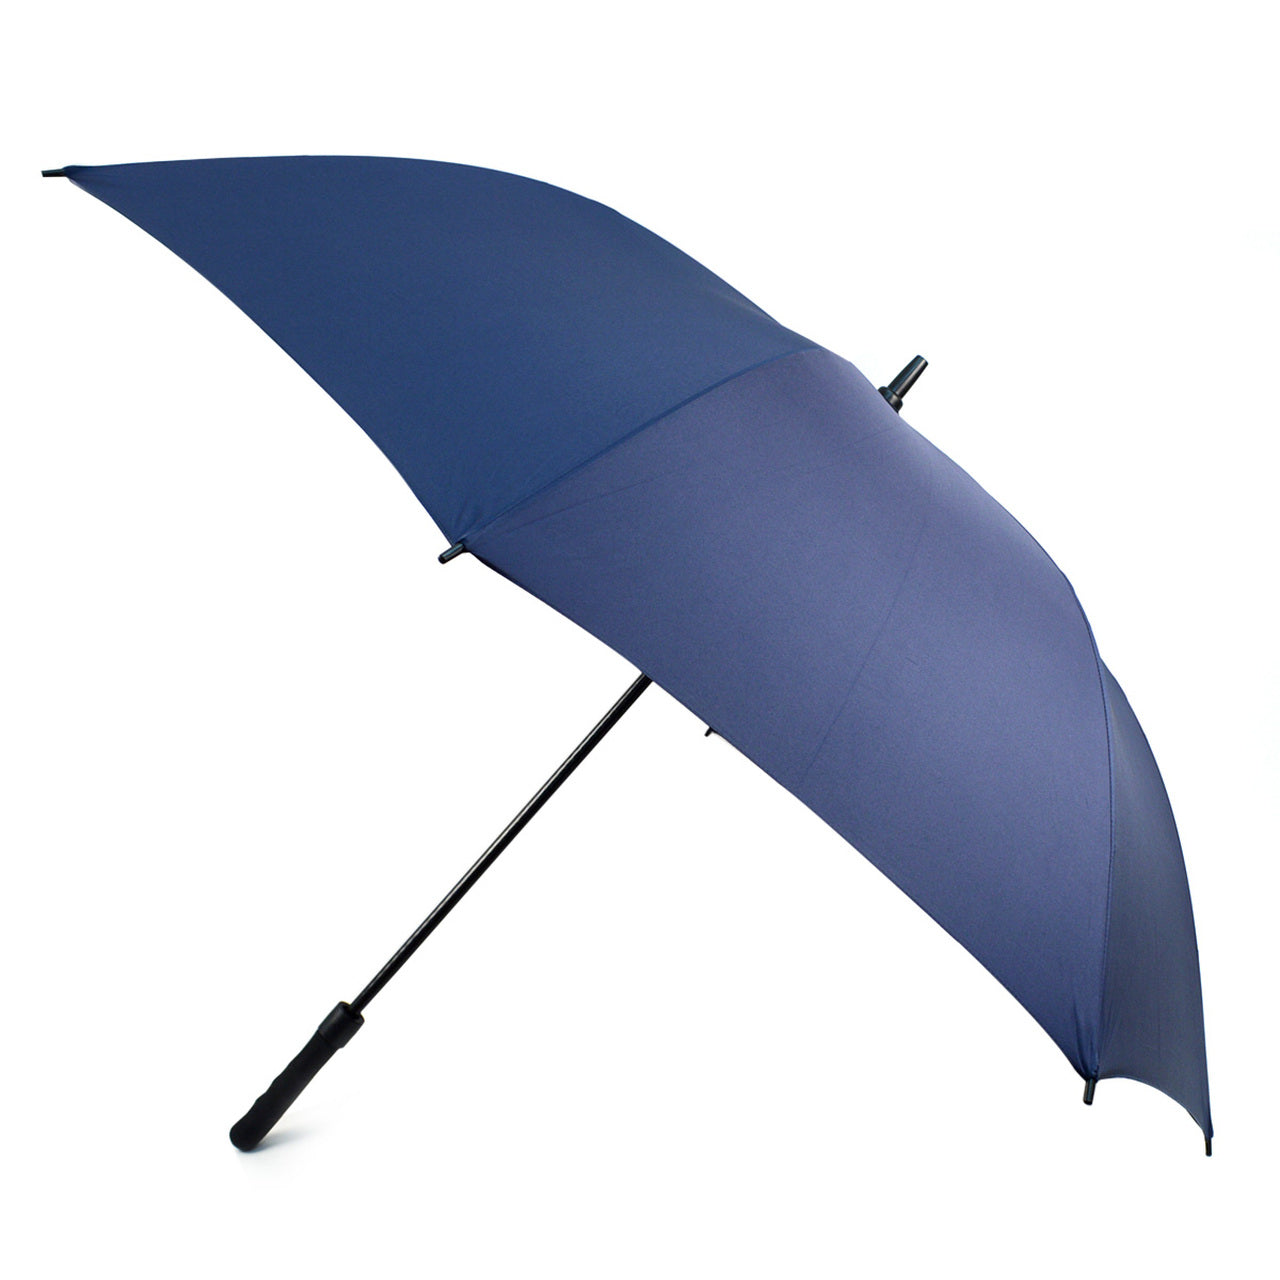 Selini Auto Open Golf Canopy Umbrella, Navy